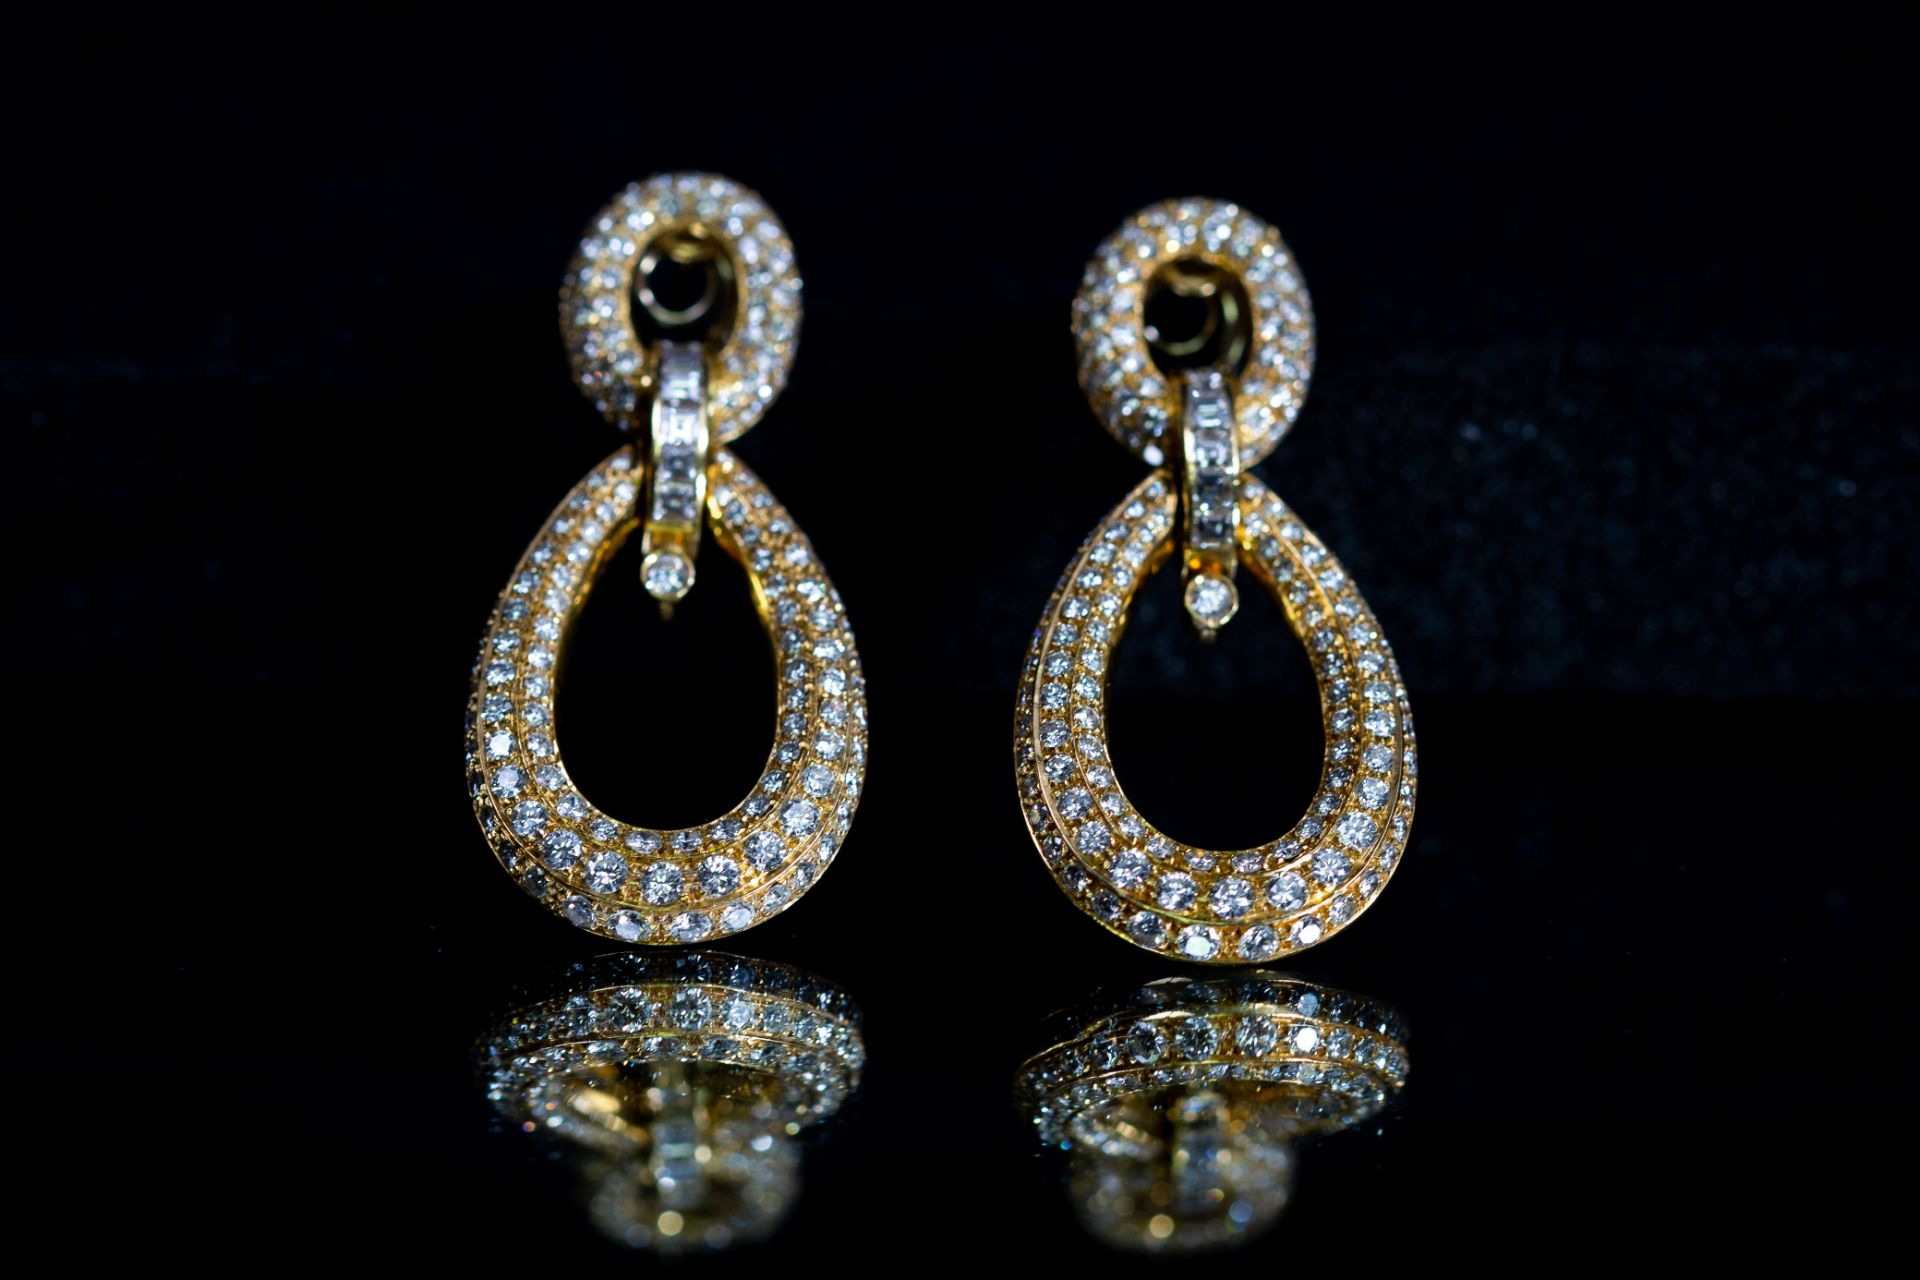 Beautiful Bespoke pendant earrings, 18k yellow gold, set with 4.6cts of VS clarity diamonds - Image 15 of 16